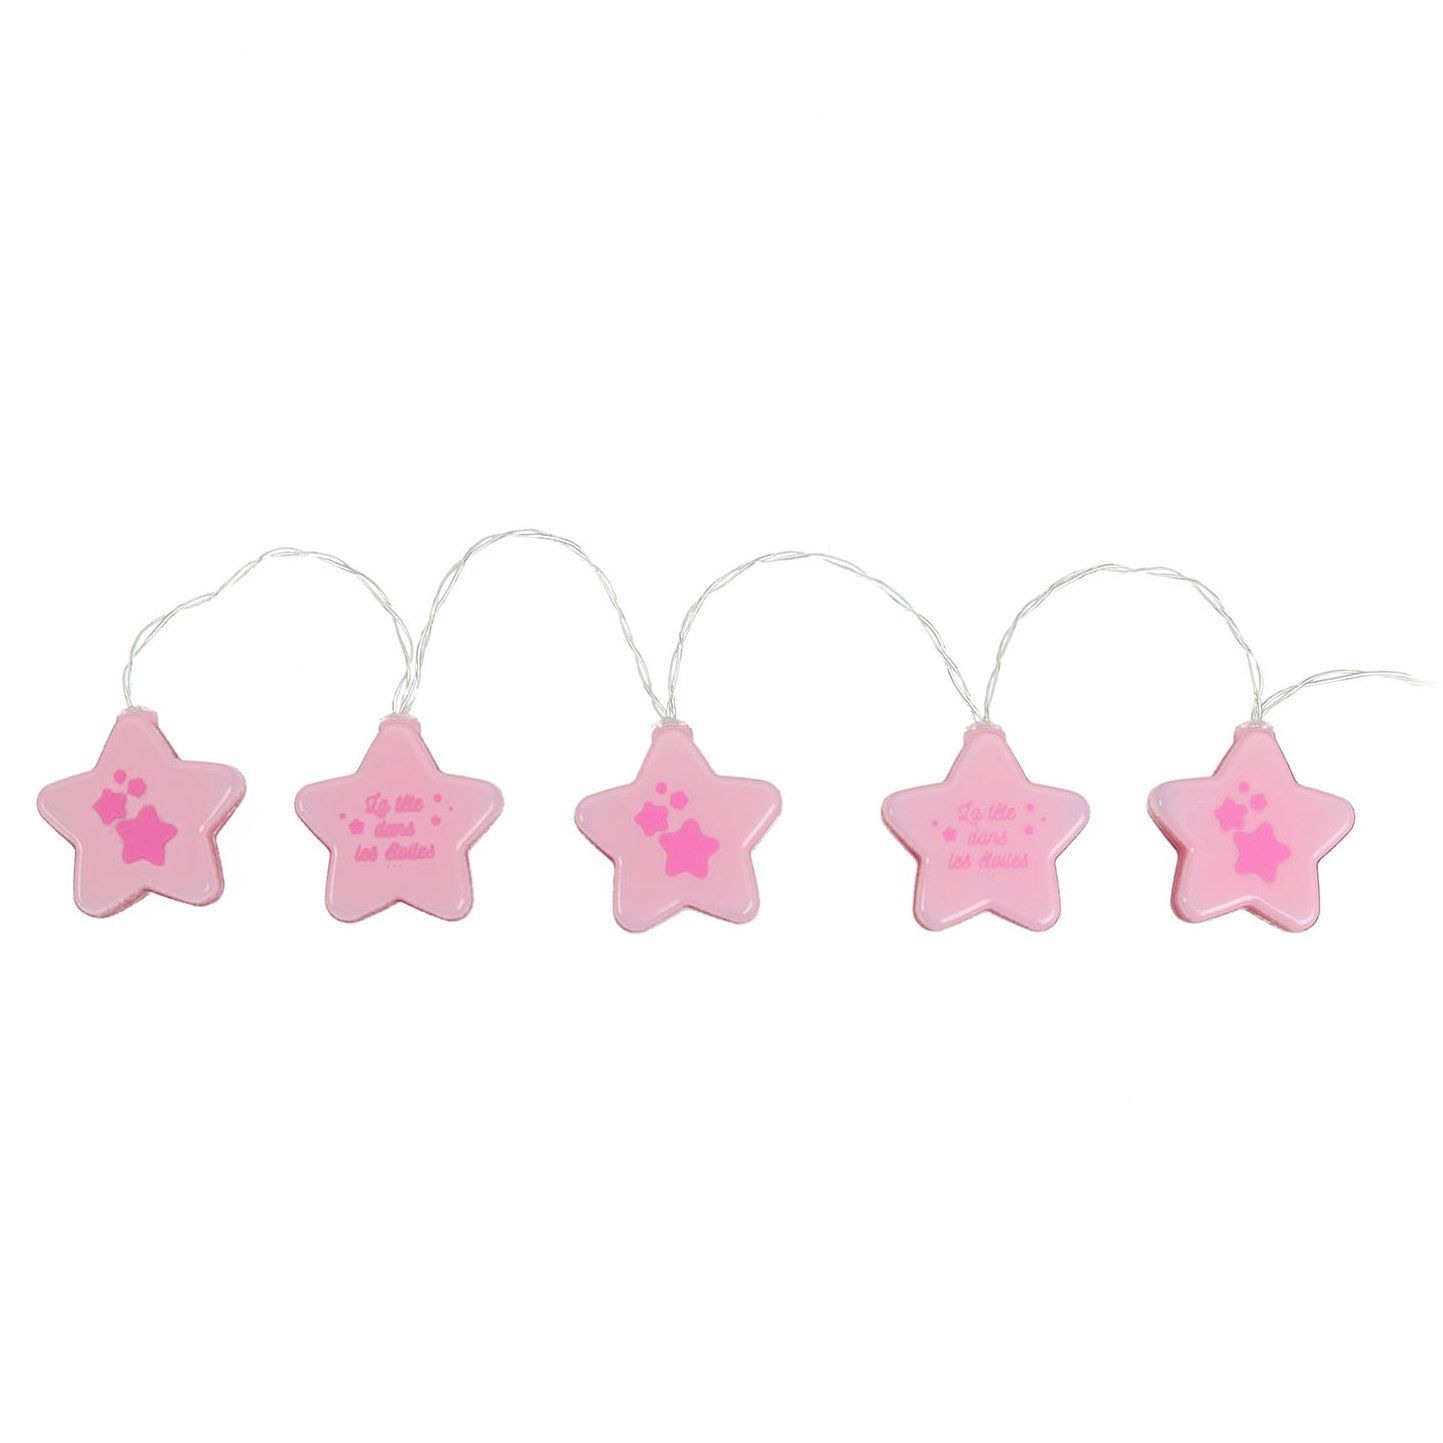 Guirlande LED ENFANT 10 étoiles en plastique rose